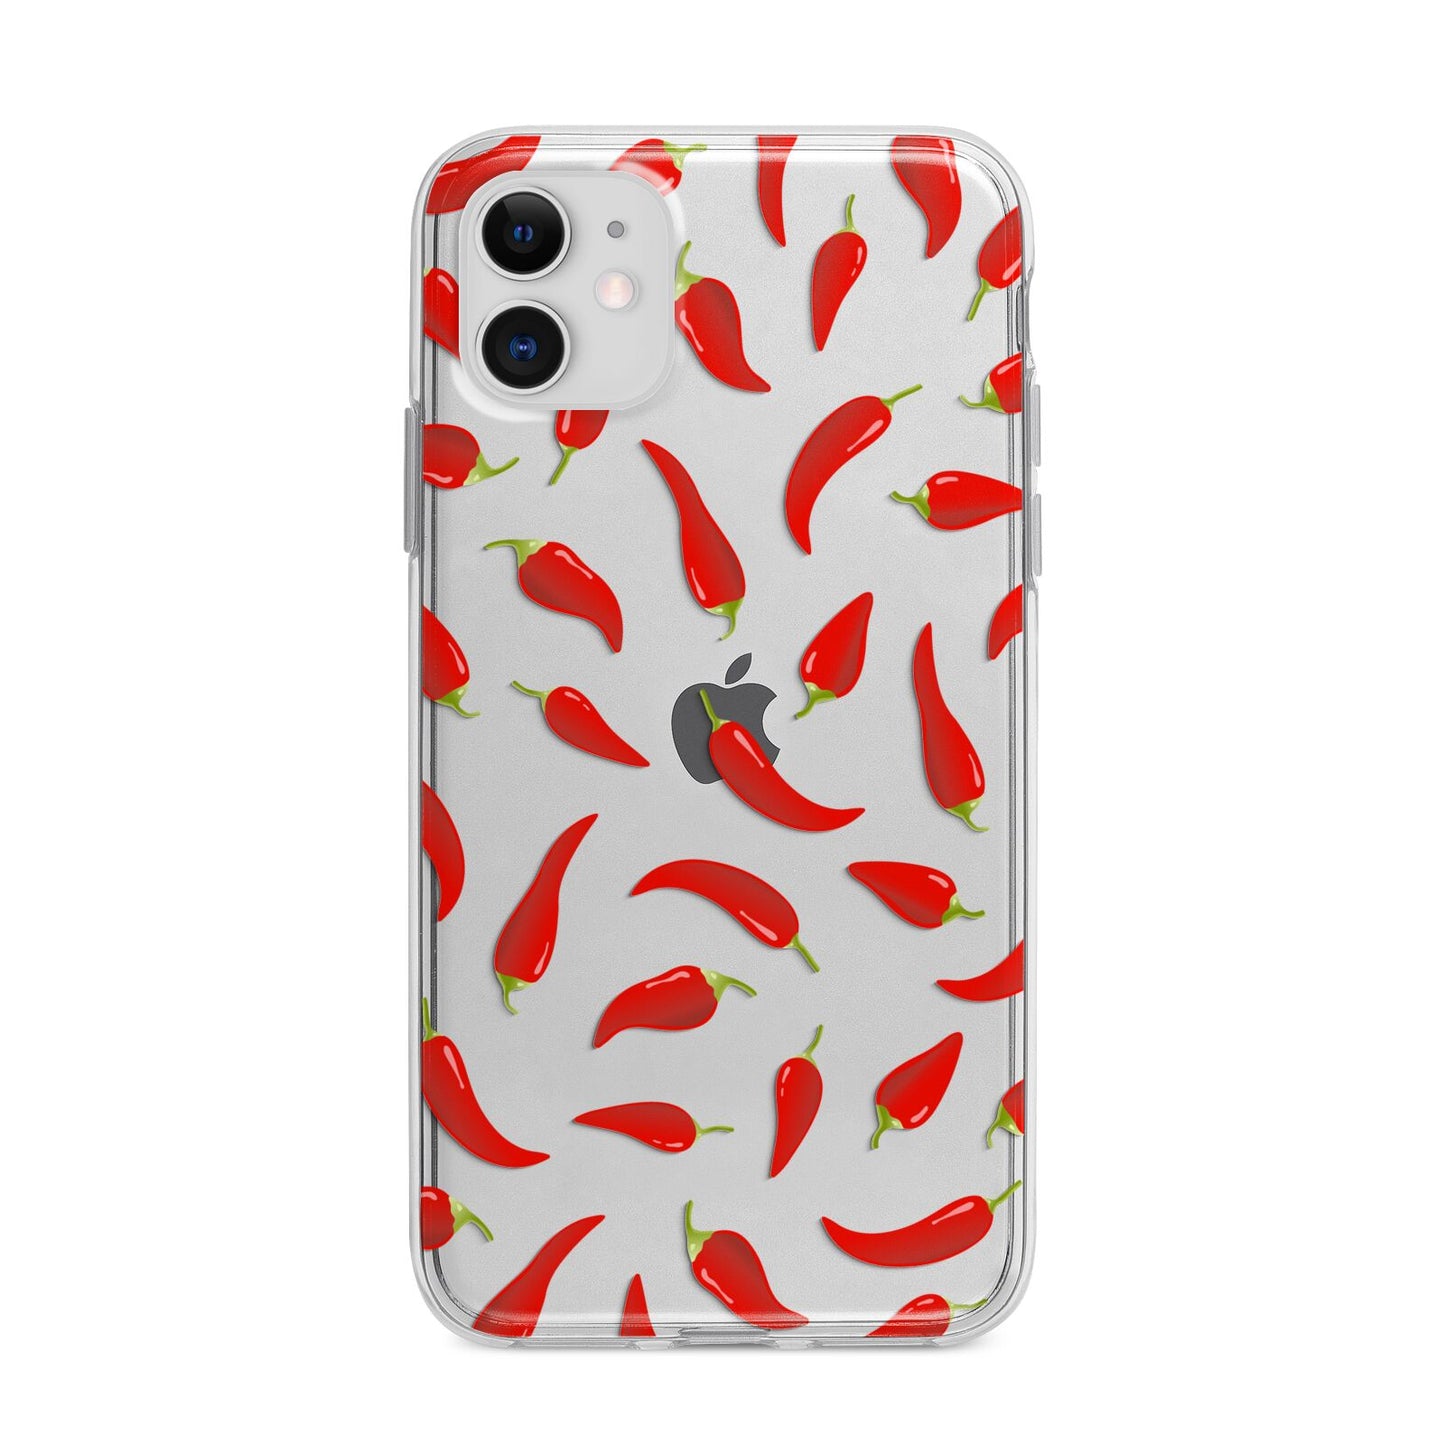 Chilli Pepper Apple iPhone 11 in White with Bumper Case